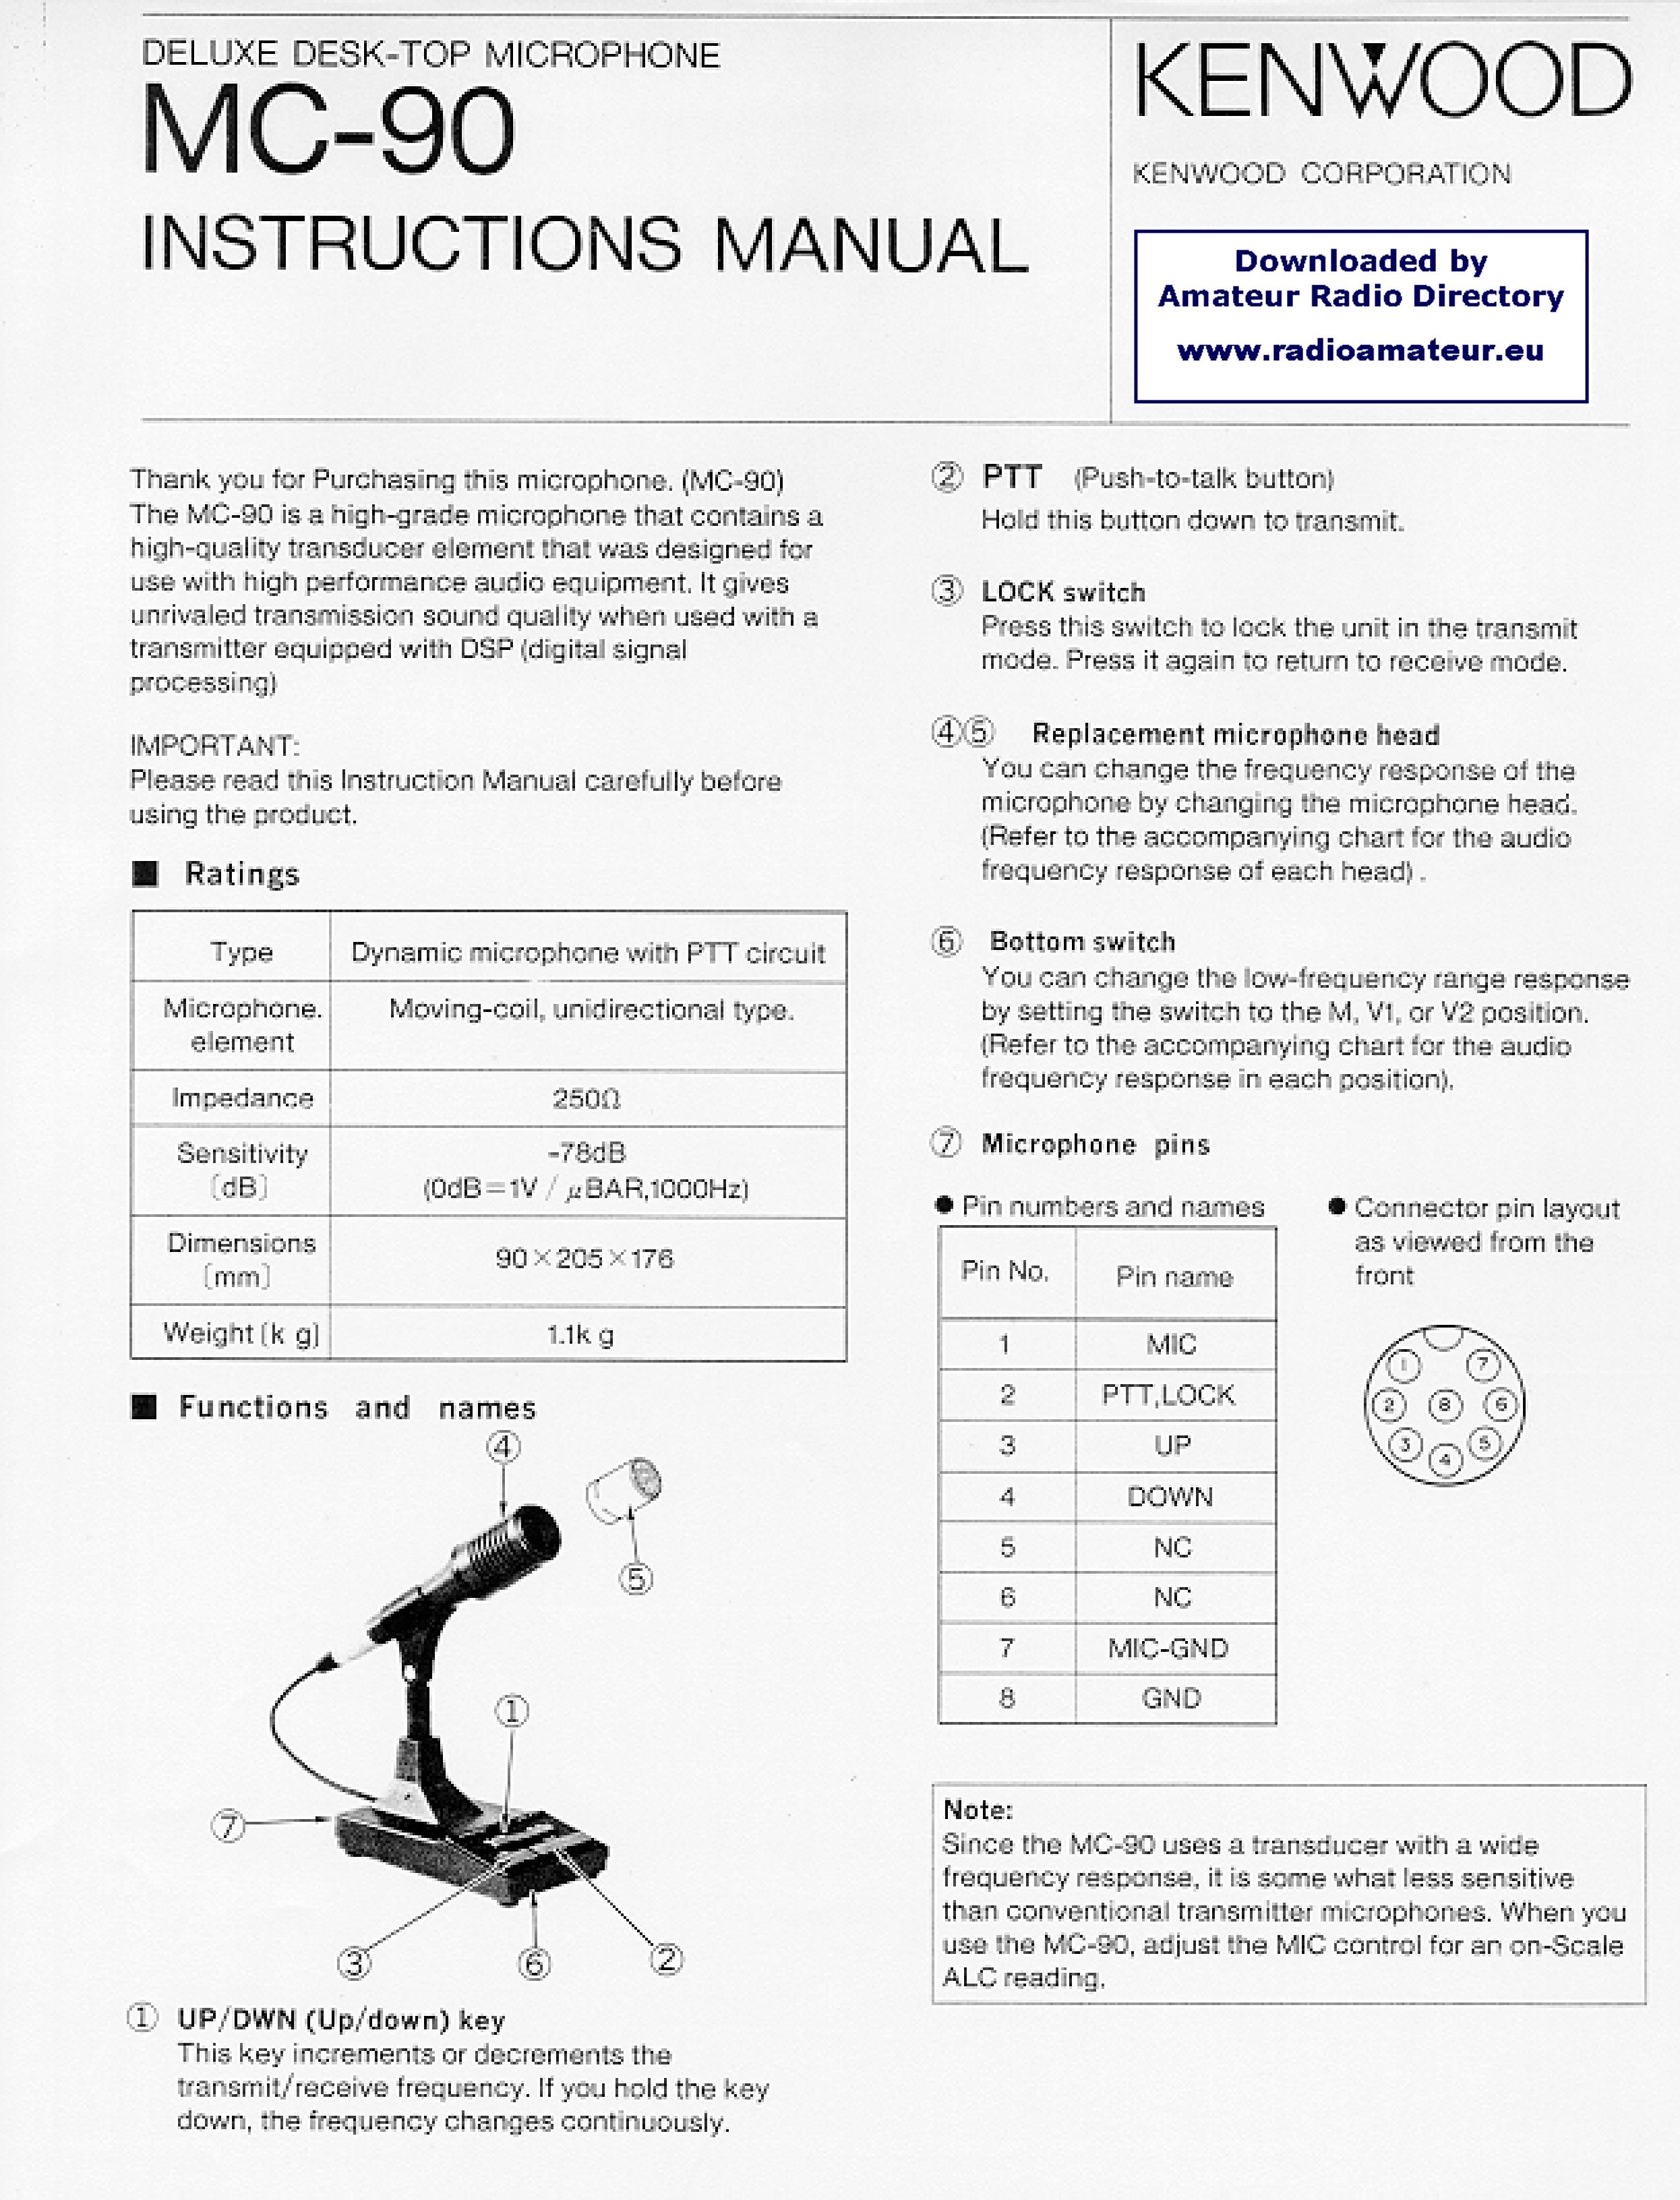 Kenwood MC-90 Microphone User Manual